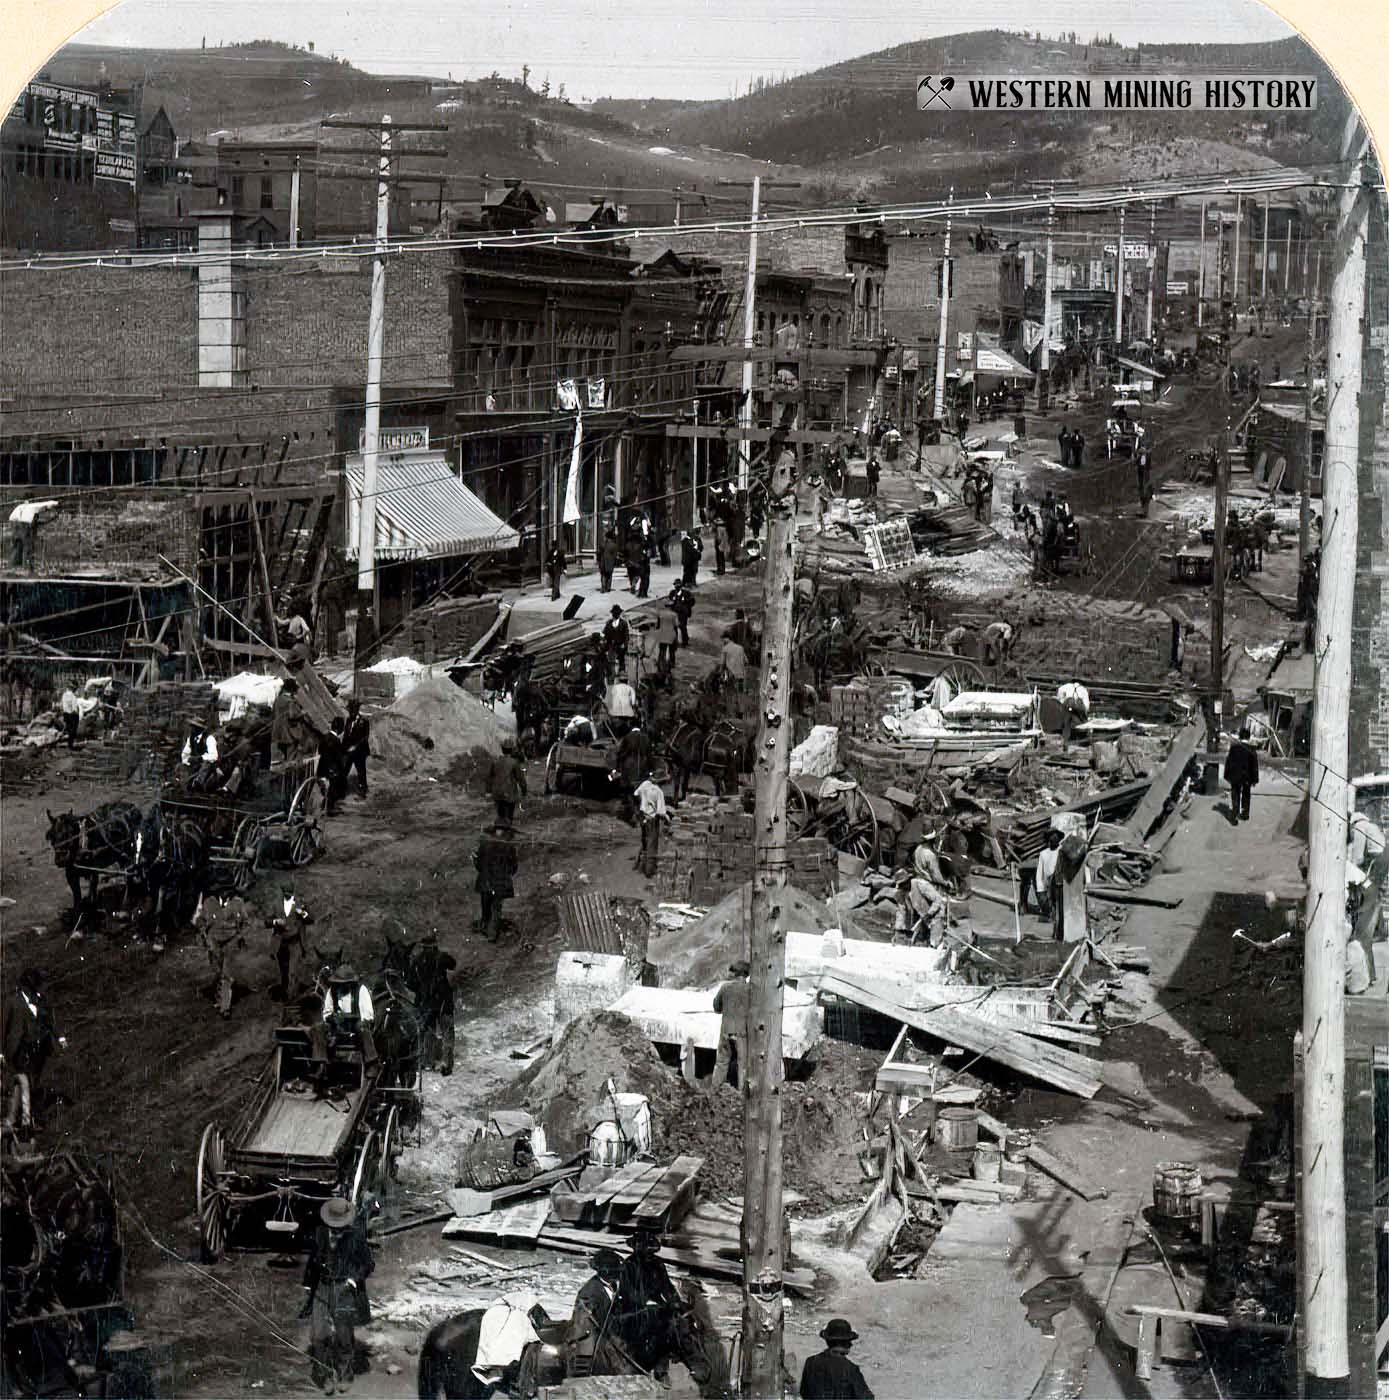 Construction at Cripple Creek, Colorado 1896